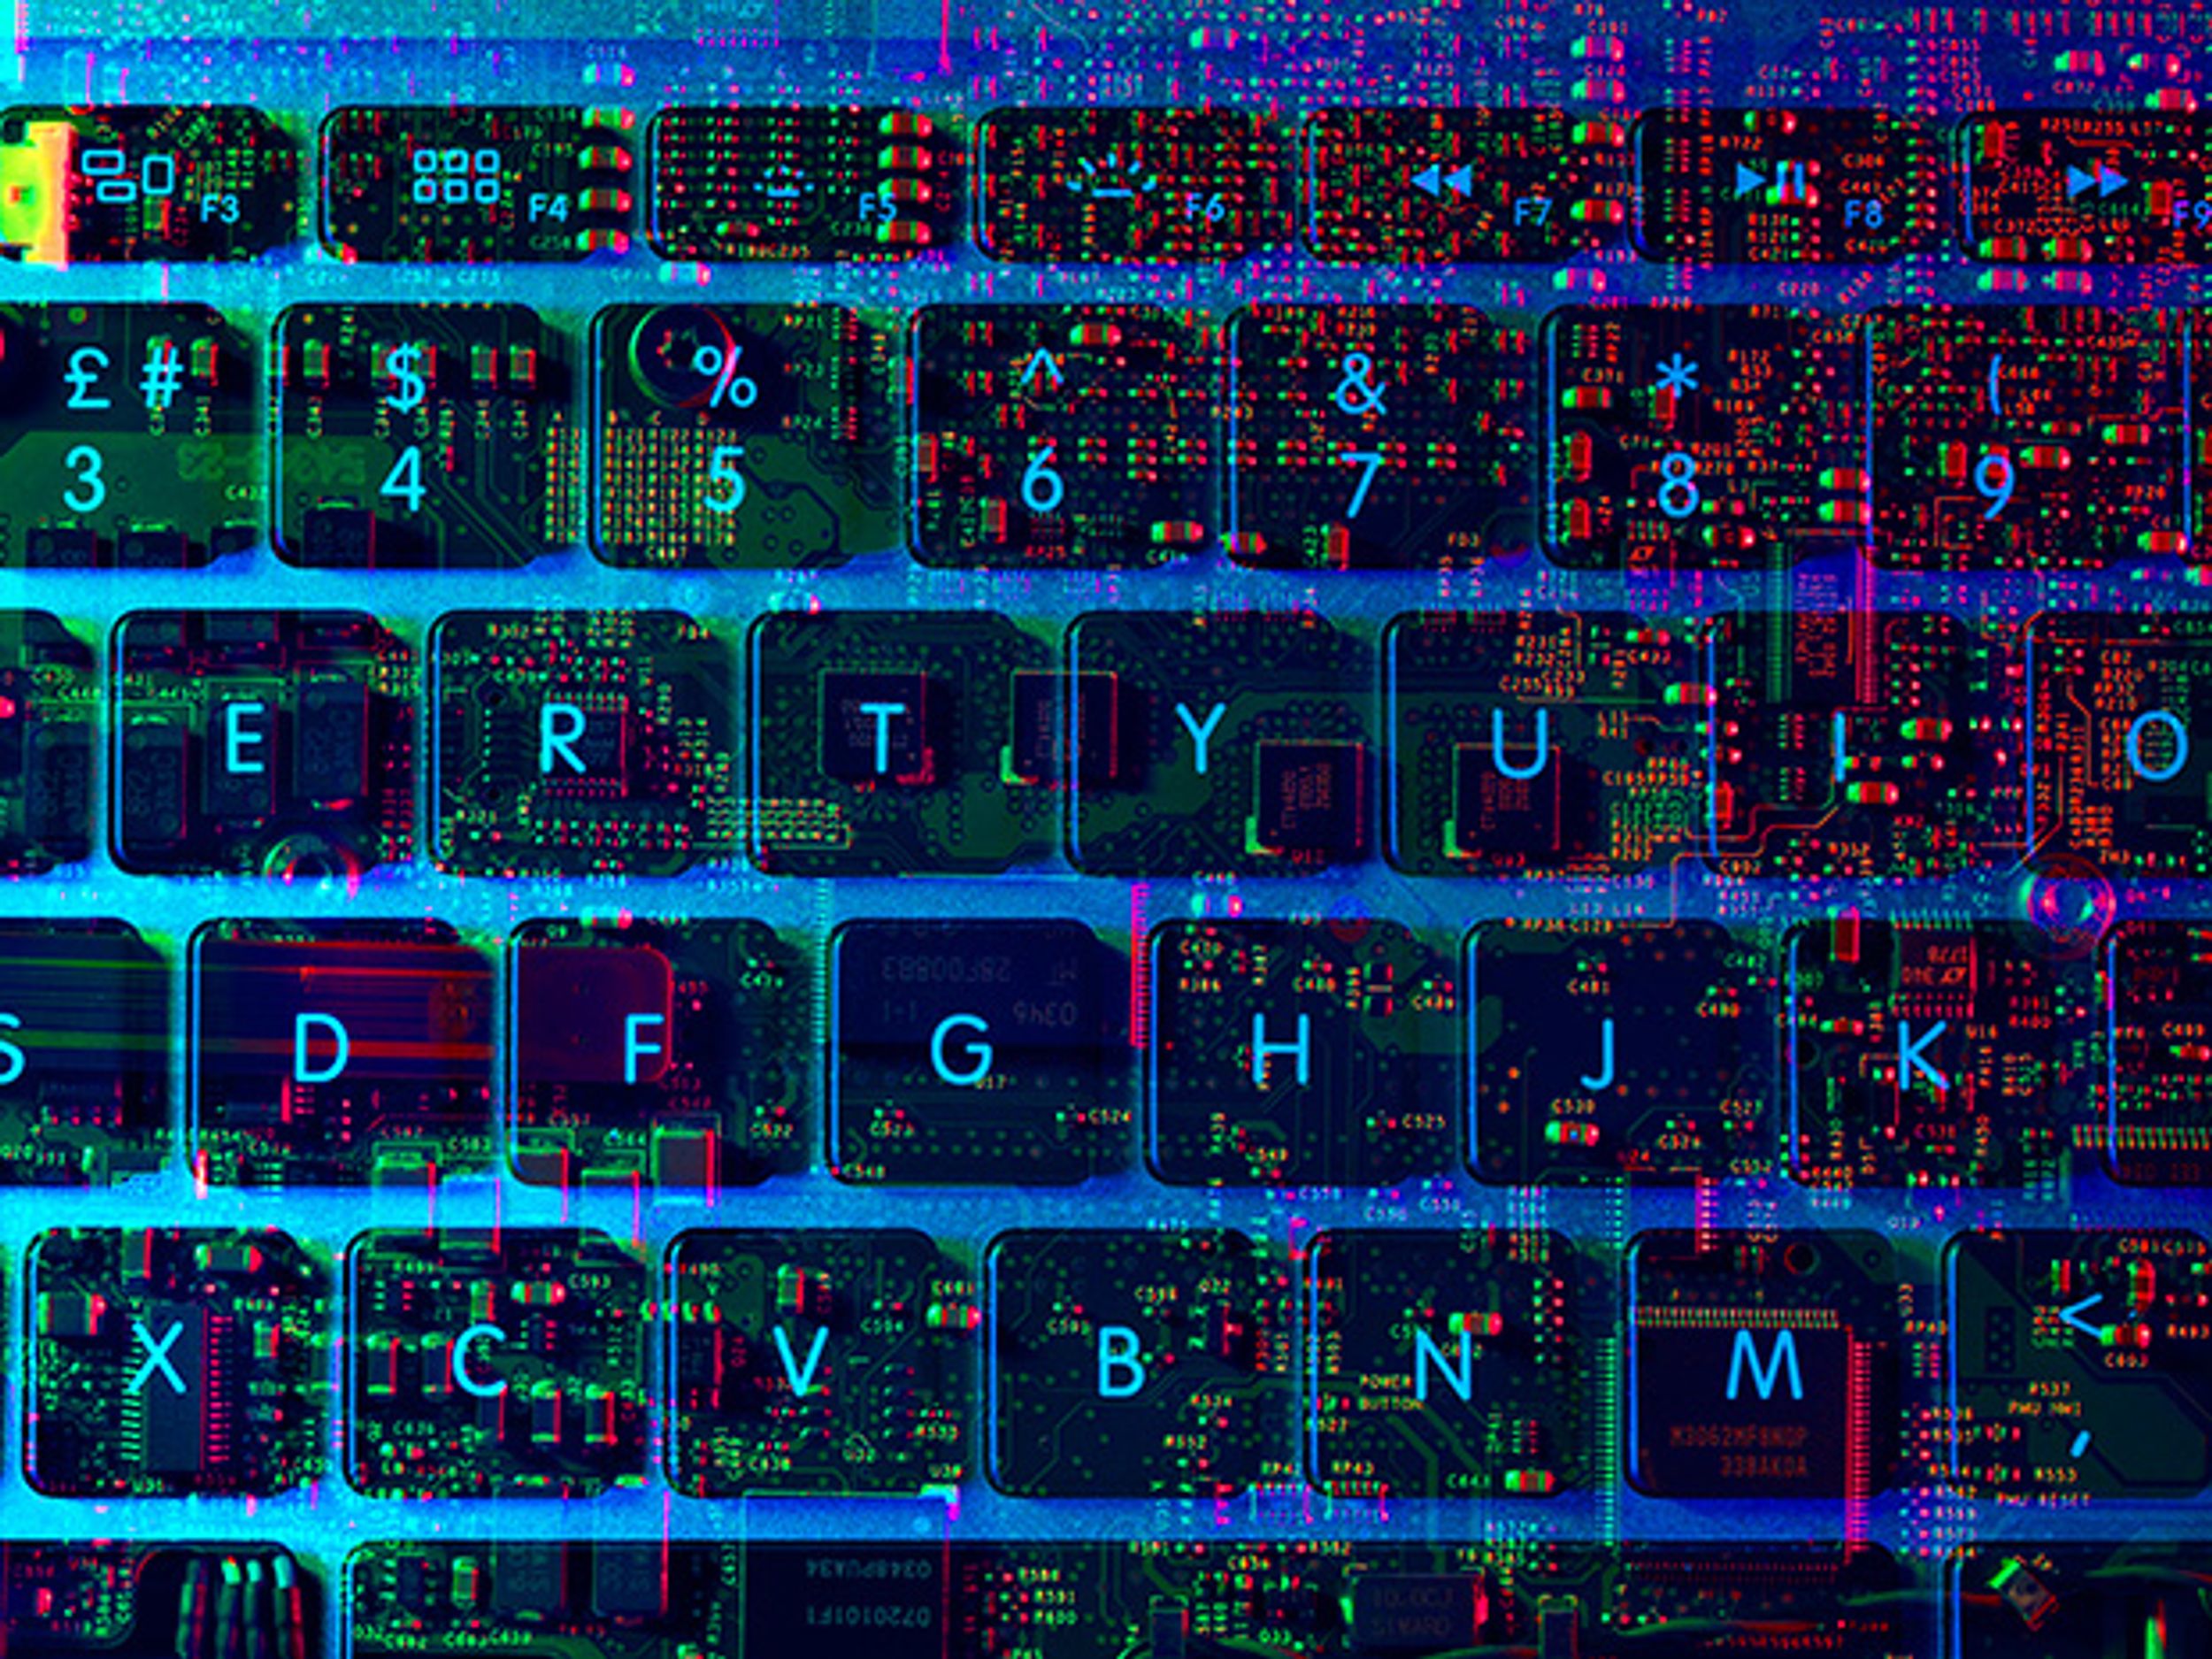 photo-illustration of keyboard